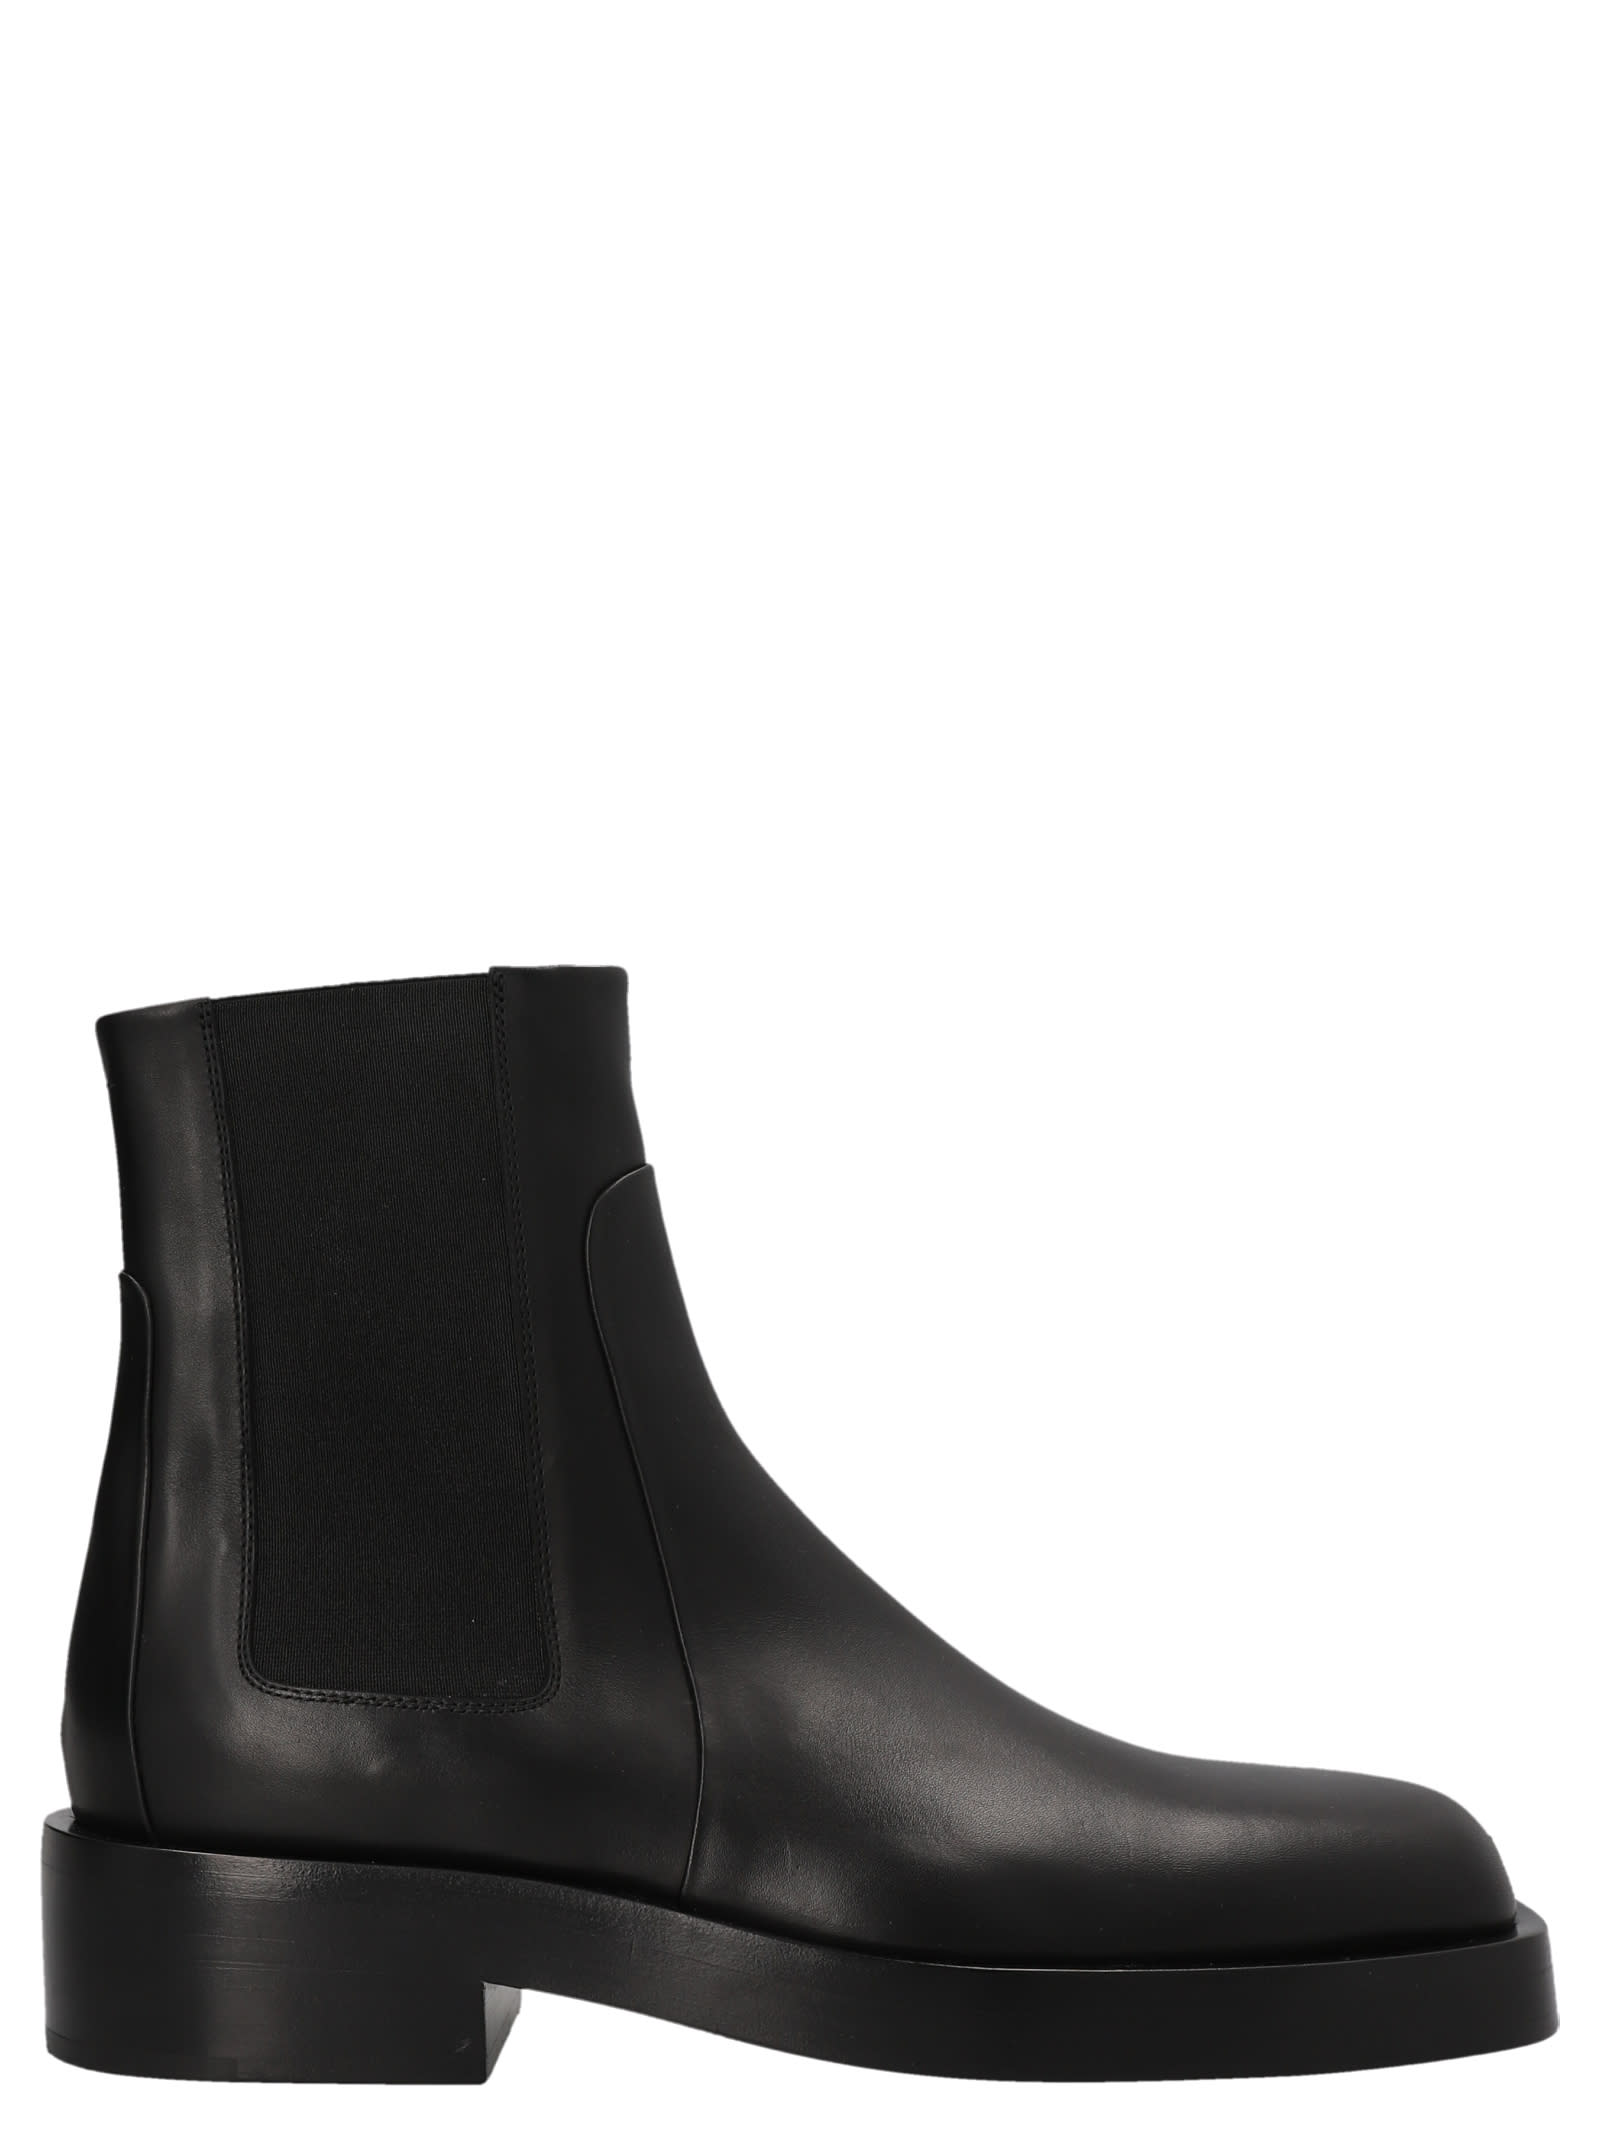 Jil Sander Beatle Leather Ankle Boots